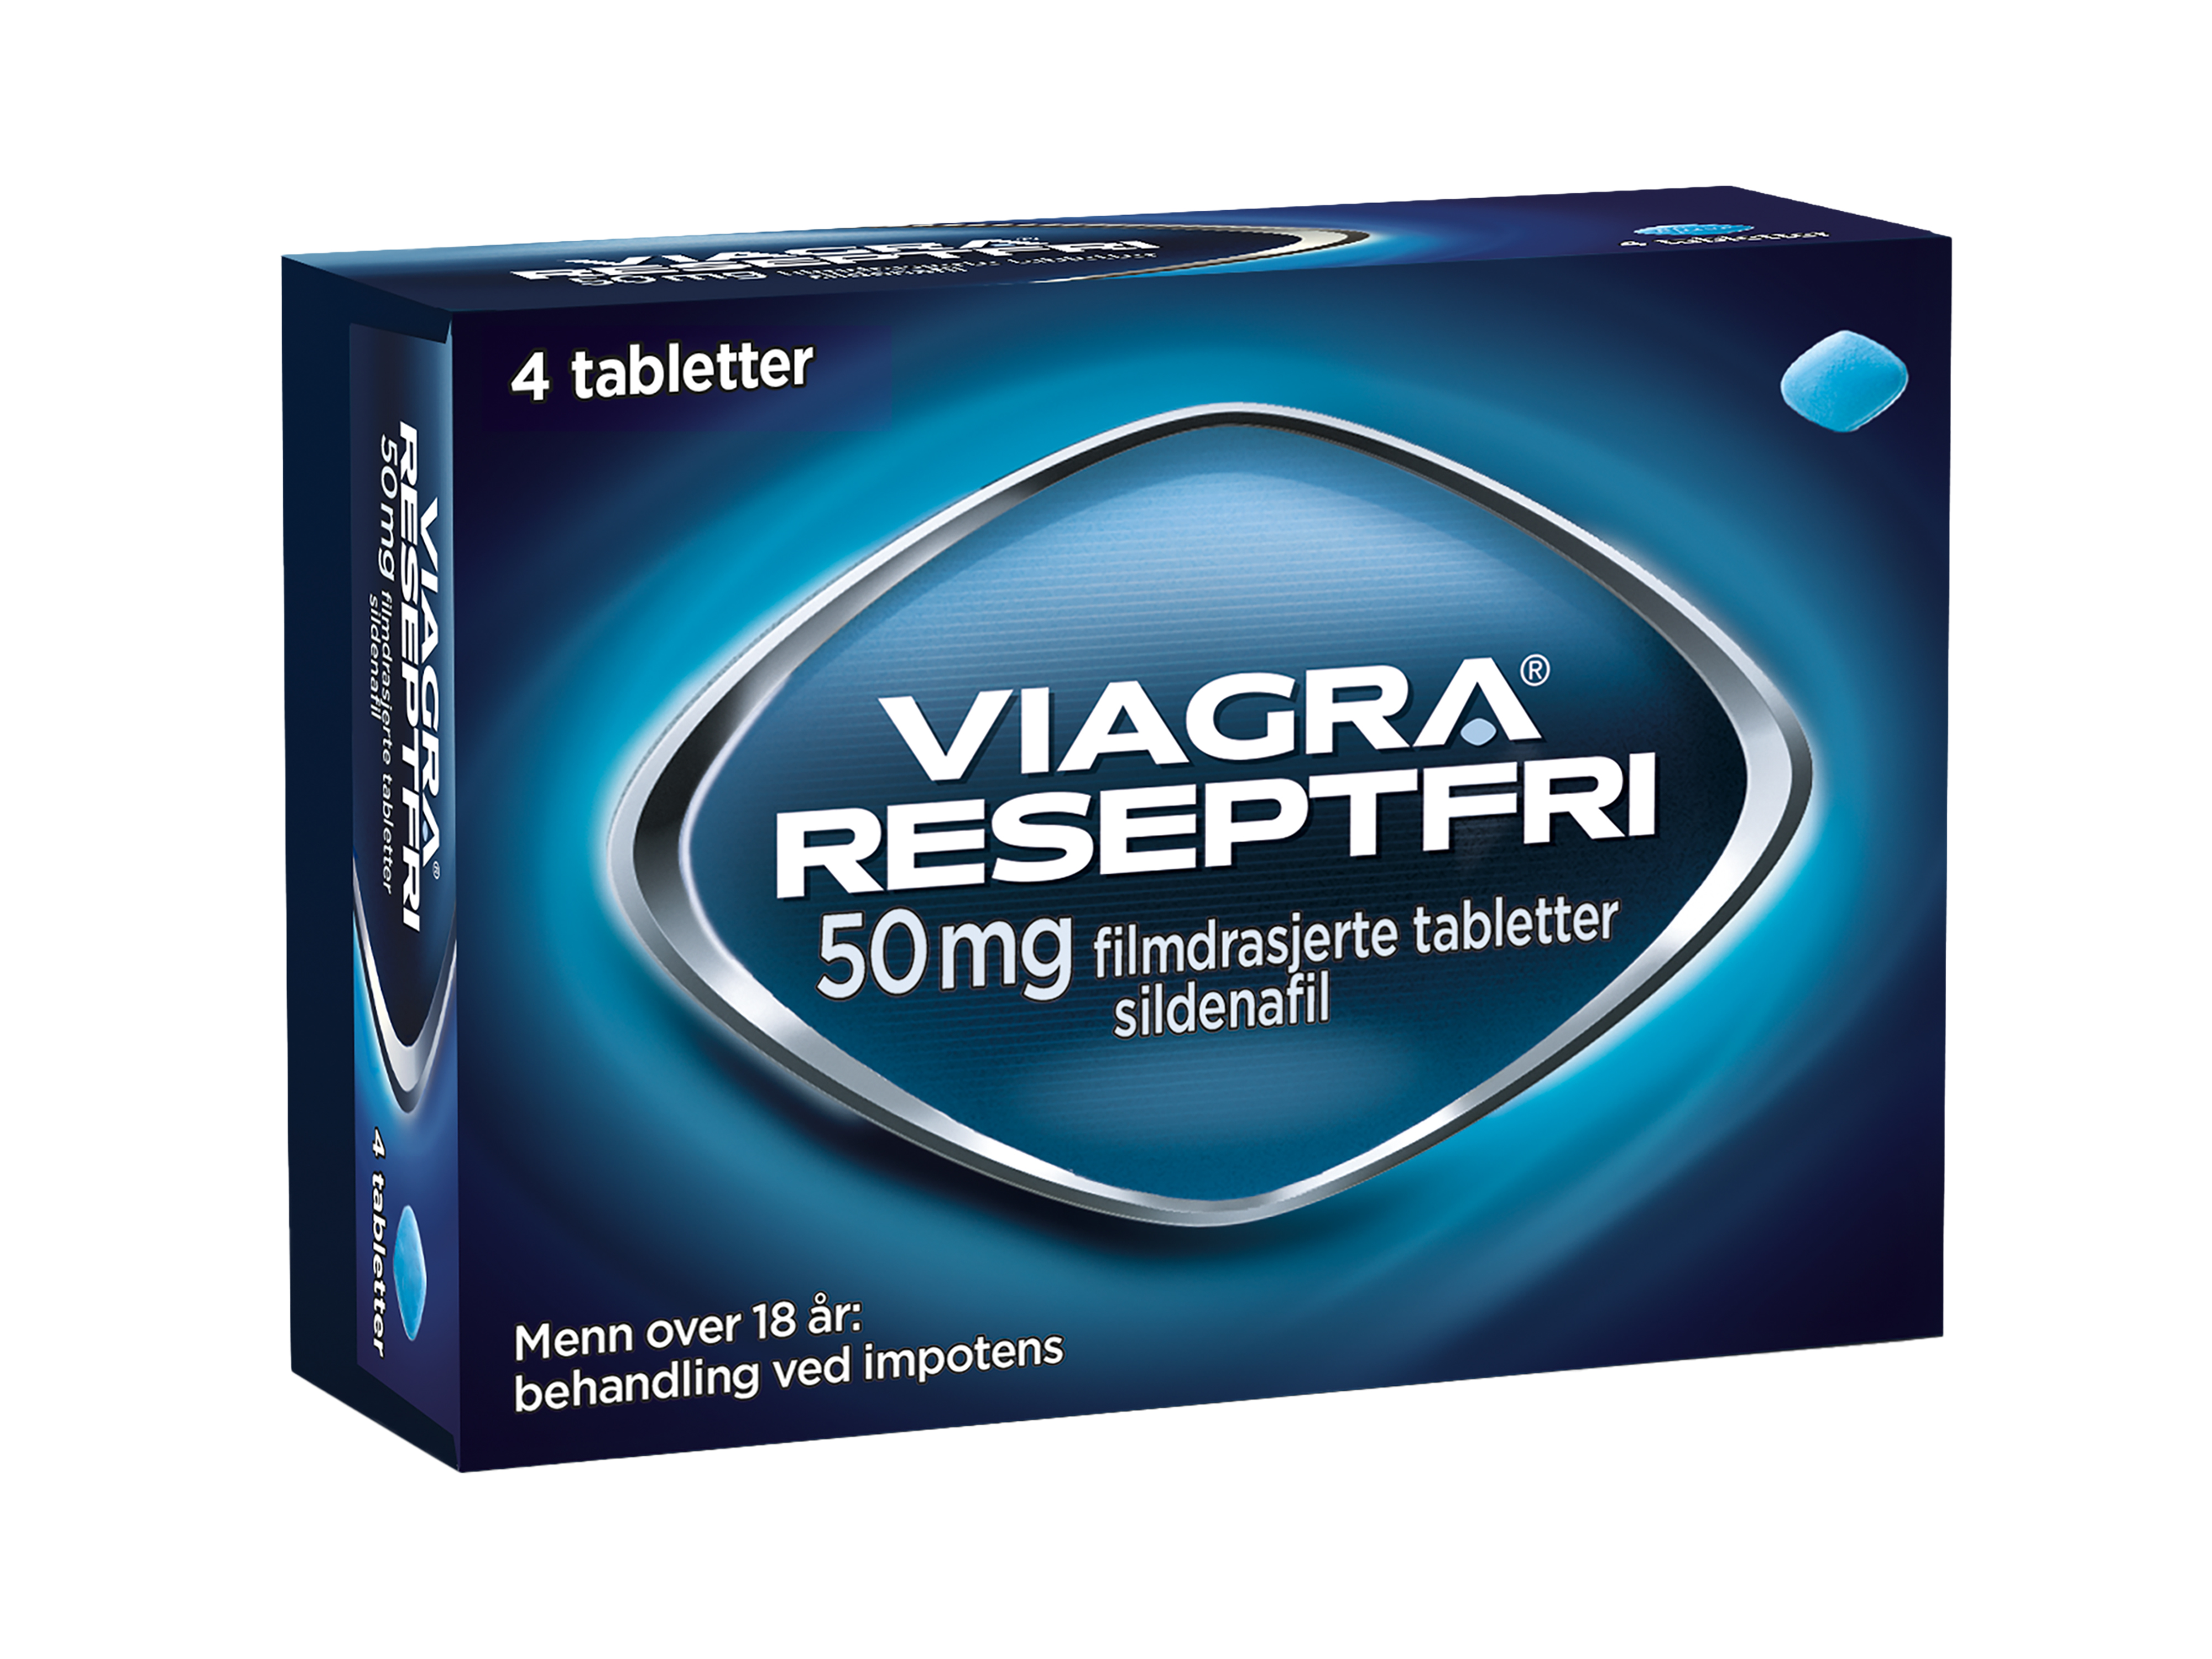 Viagra Reseptfri, 50 mg, 4 tabletter